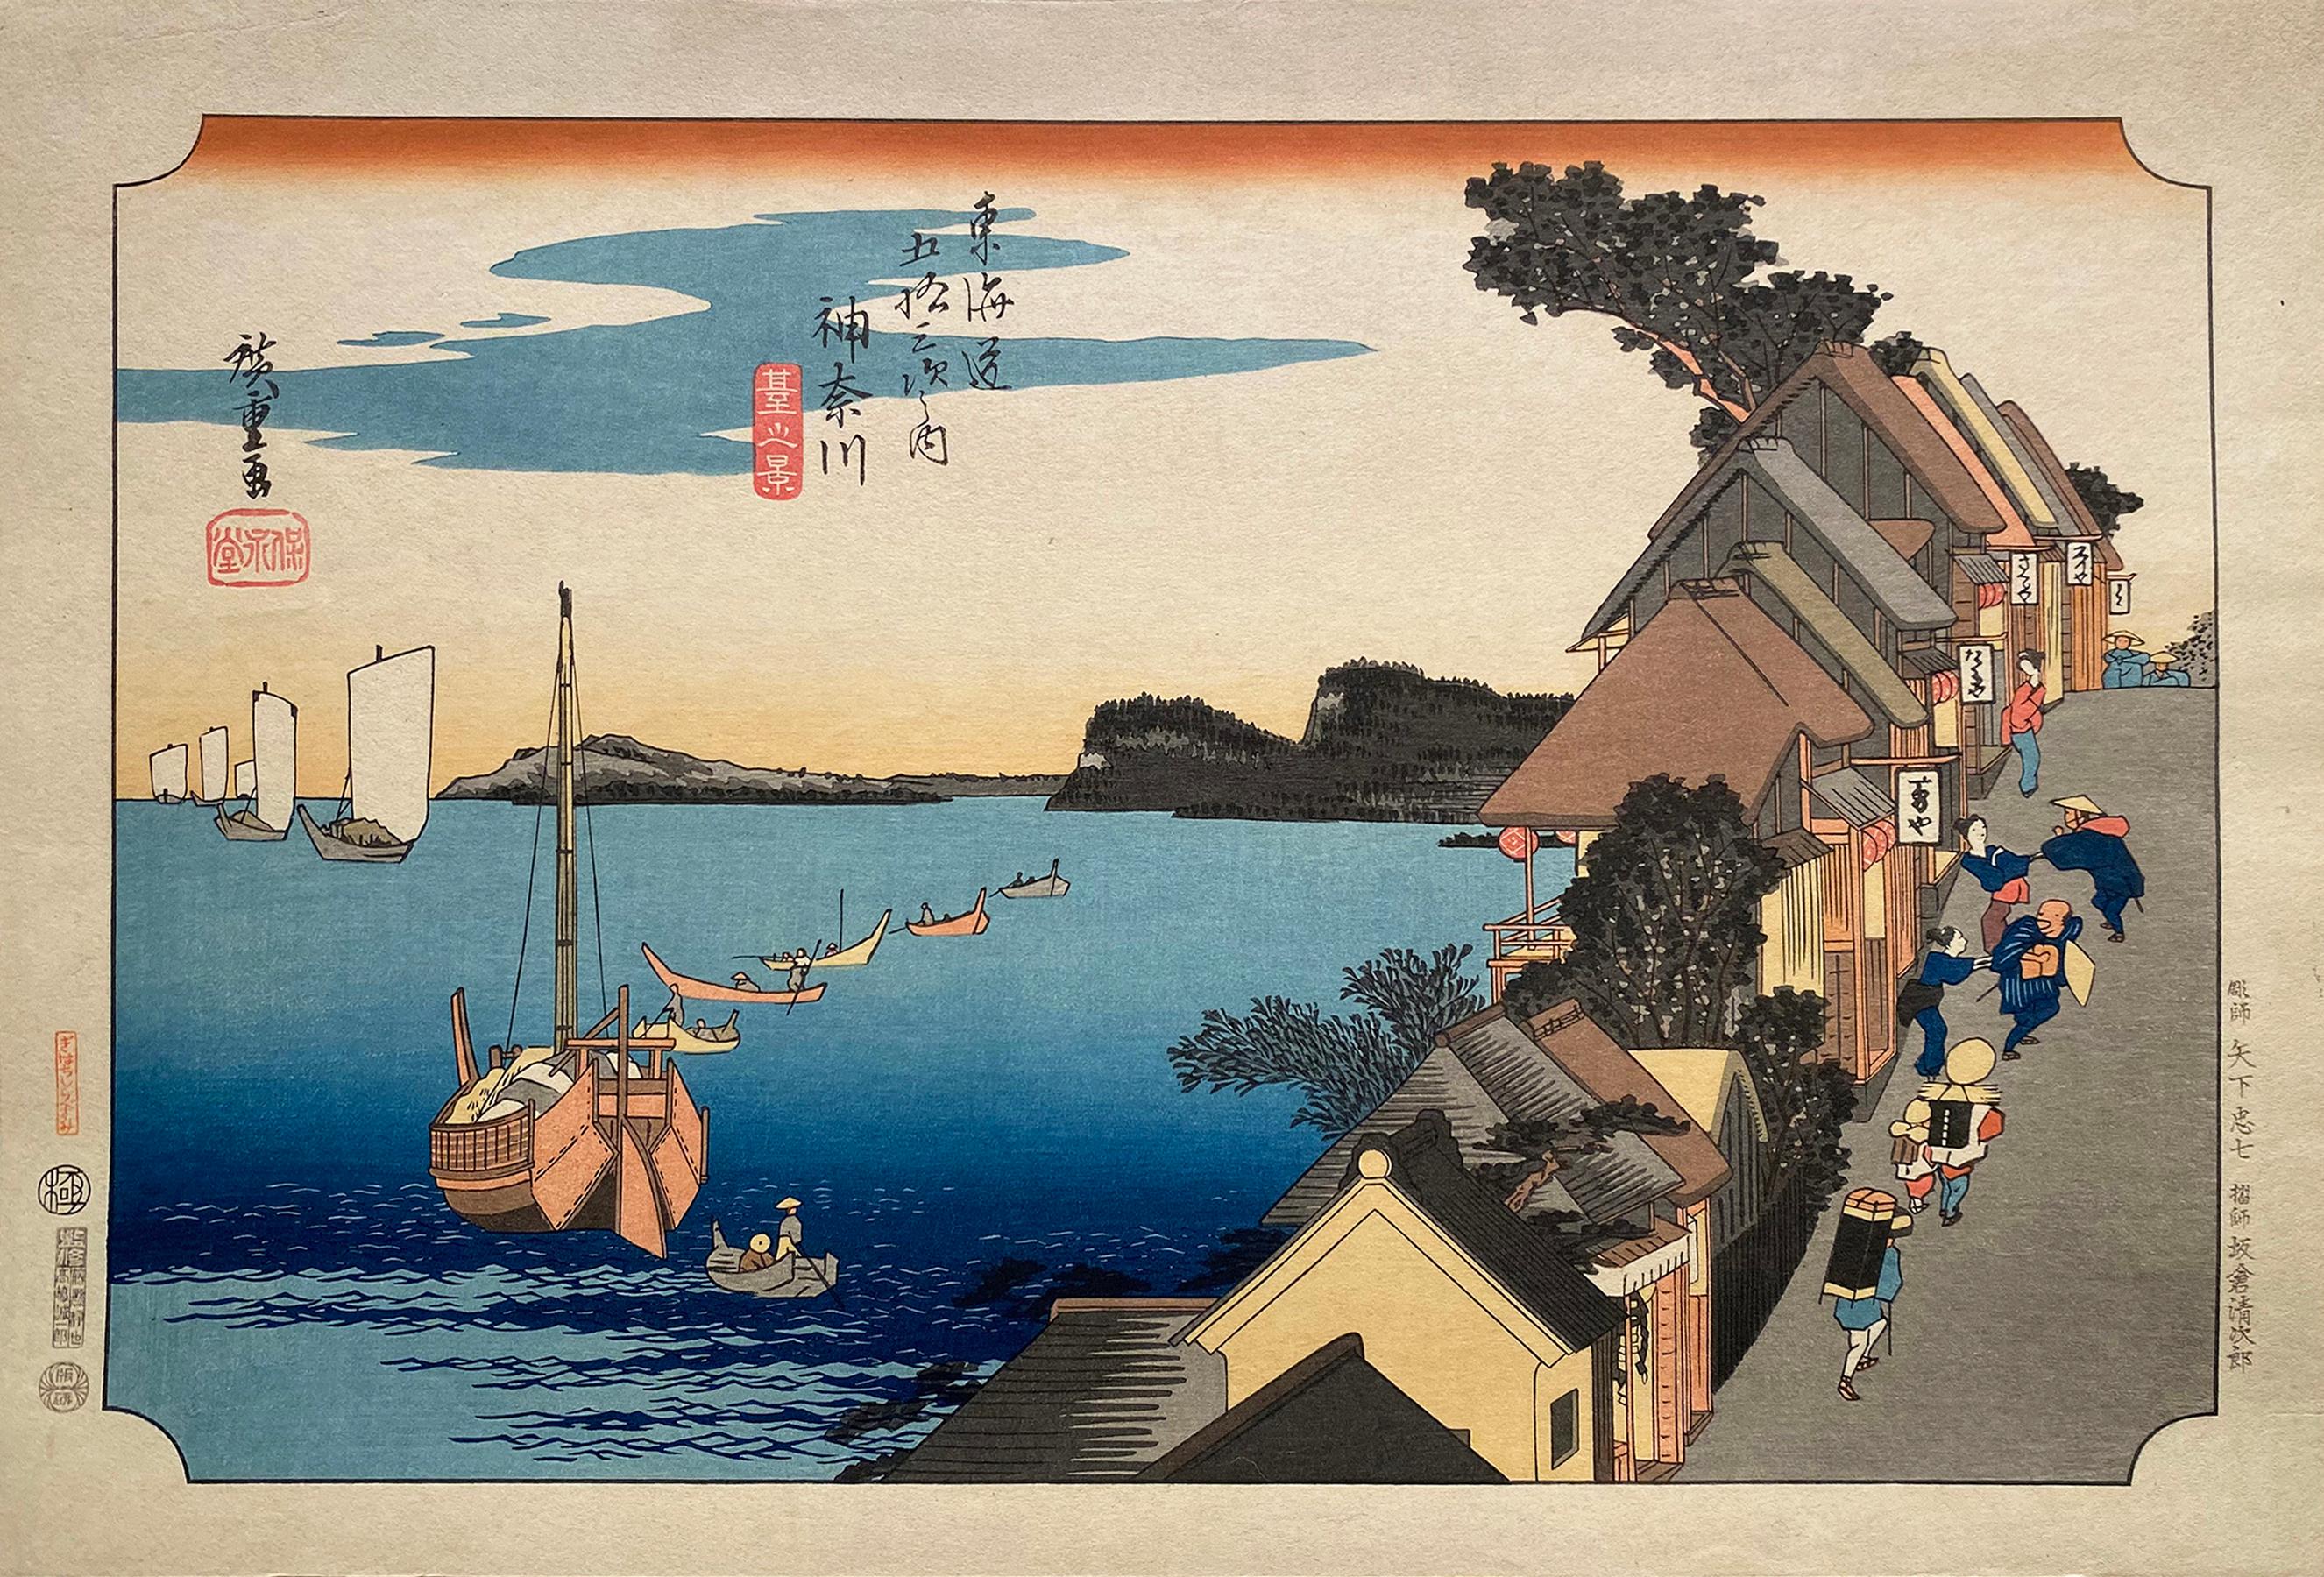 Utagawa Hiroshige (Ando Hiroshige) Landscape Print – Eine Ansicht von Kanagawa", nach Utagawa Hiroshige 歌川廣重, Ukiyo-e Holzschnitt, Tokaido